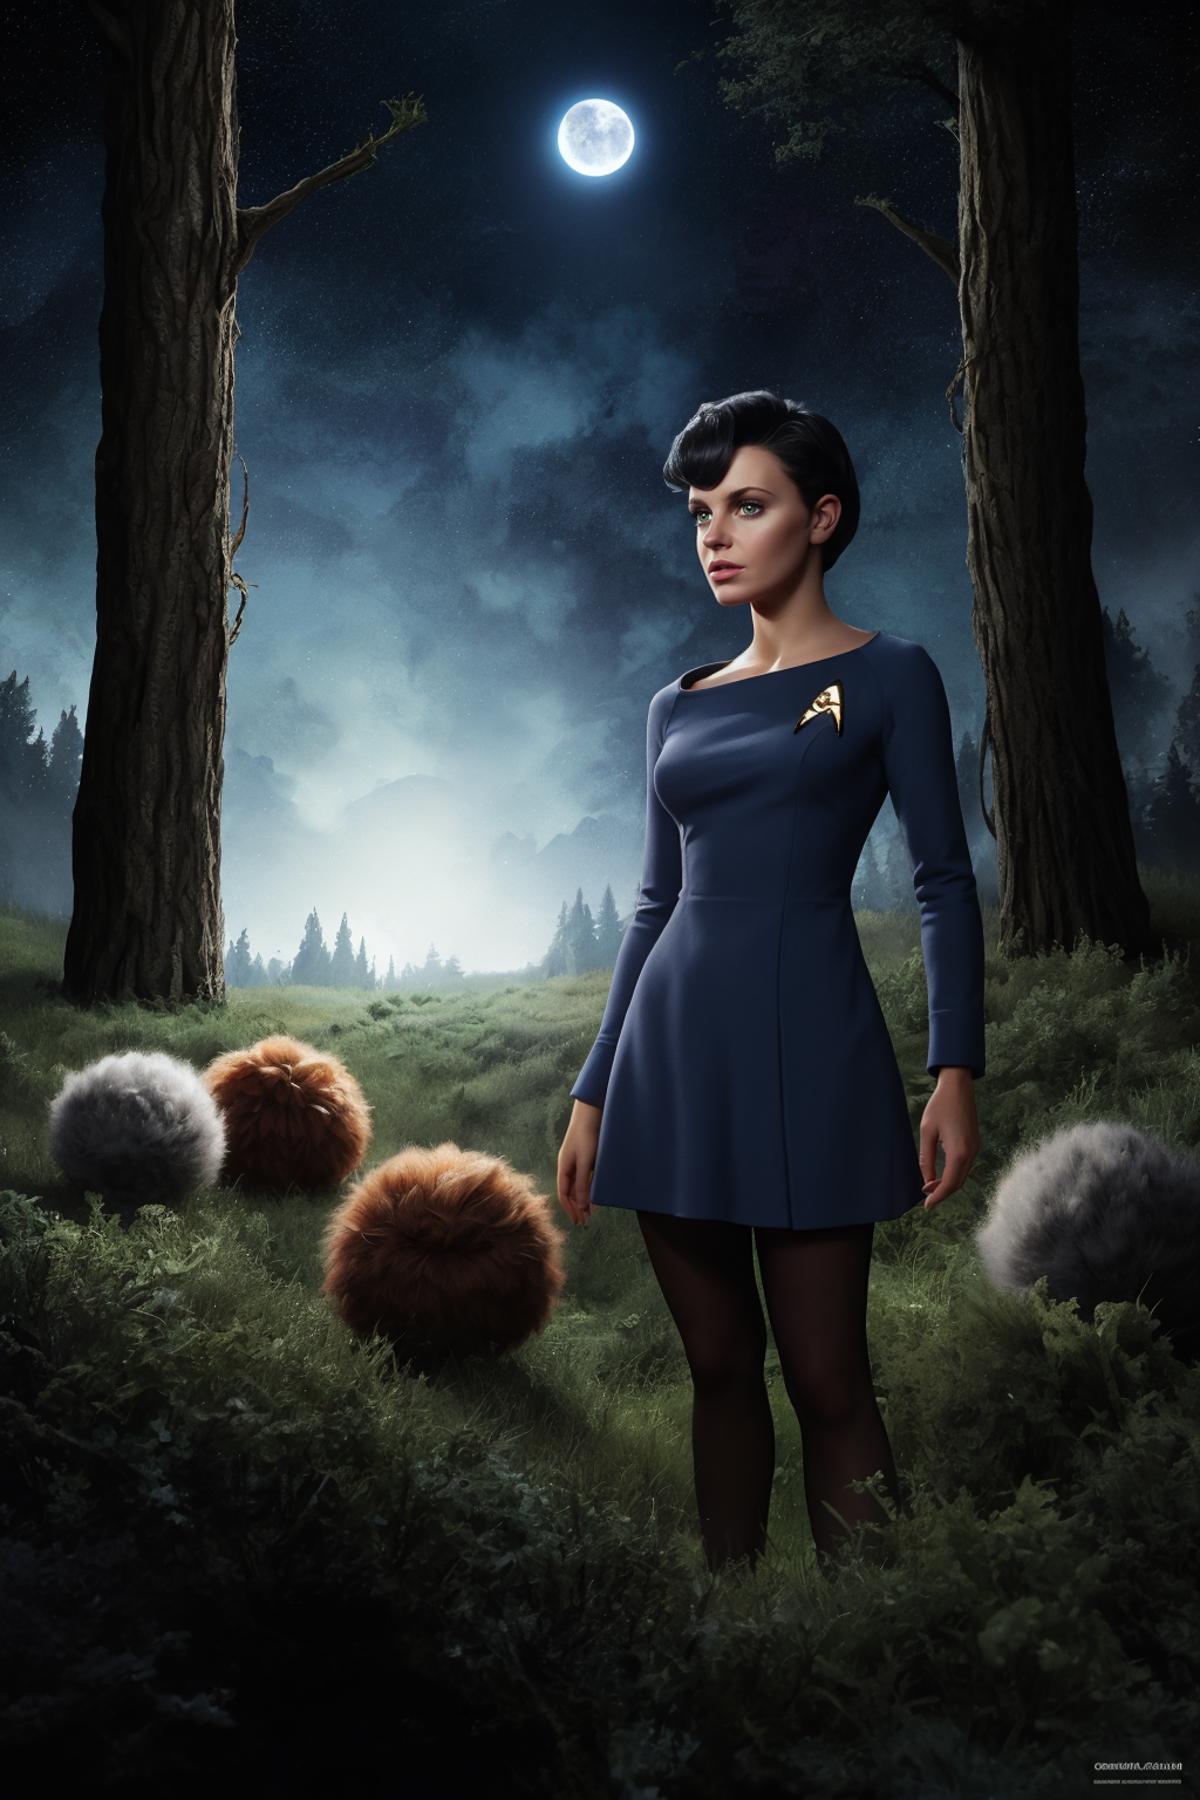 Star Trek TOS uniforms image by Haircut66